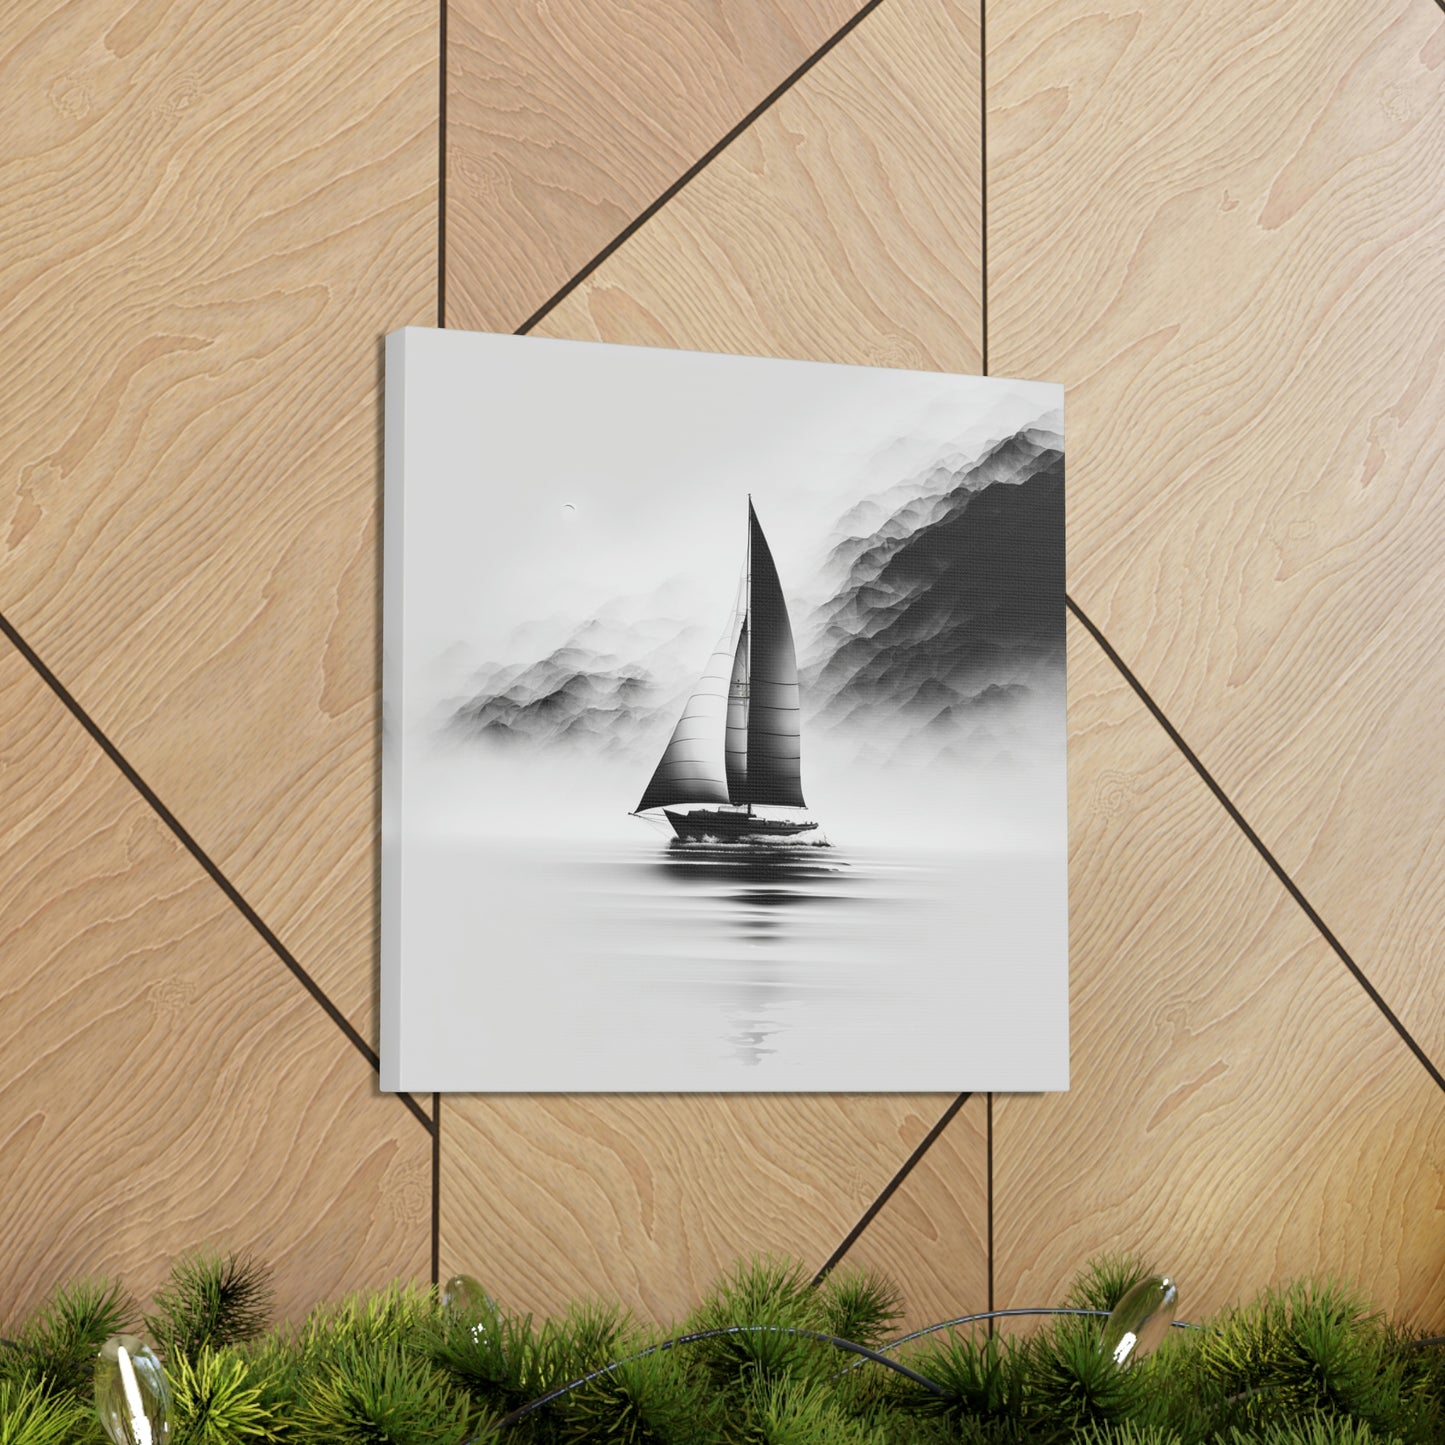 Black and white sailboat